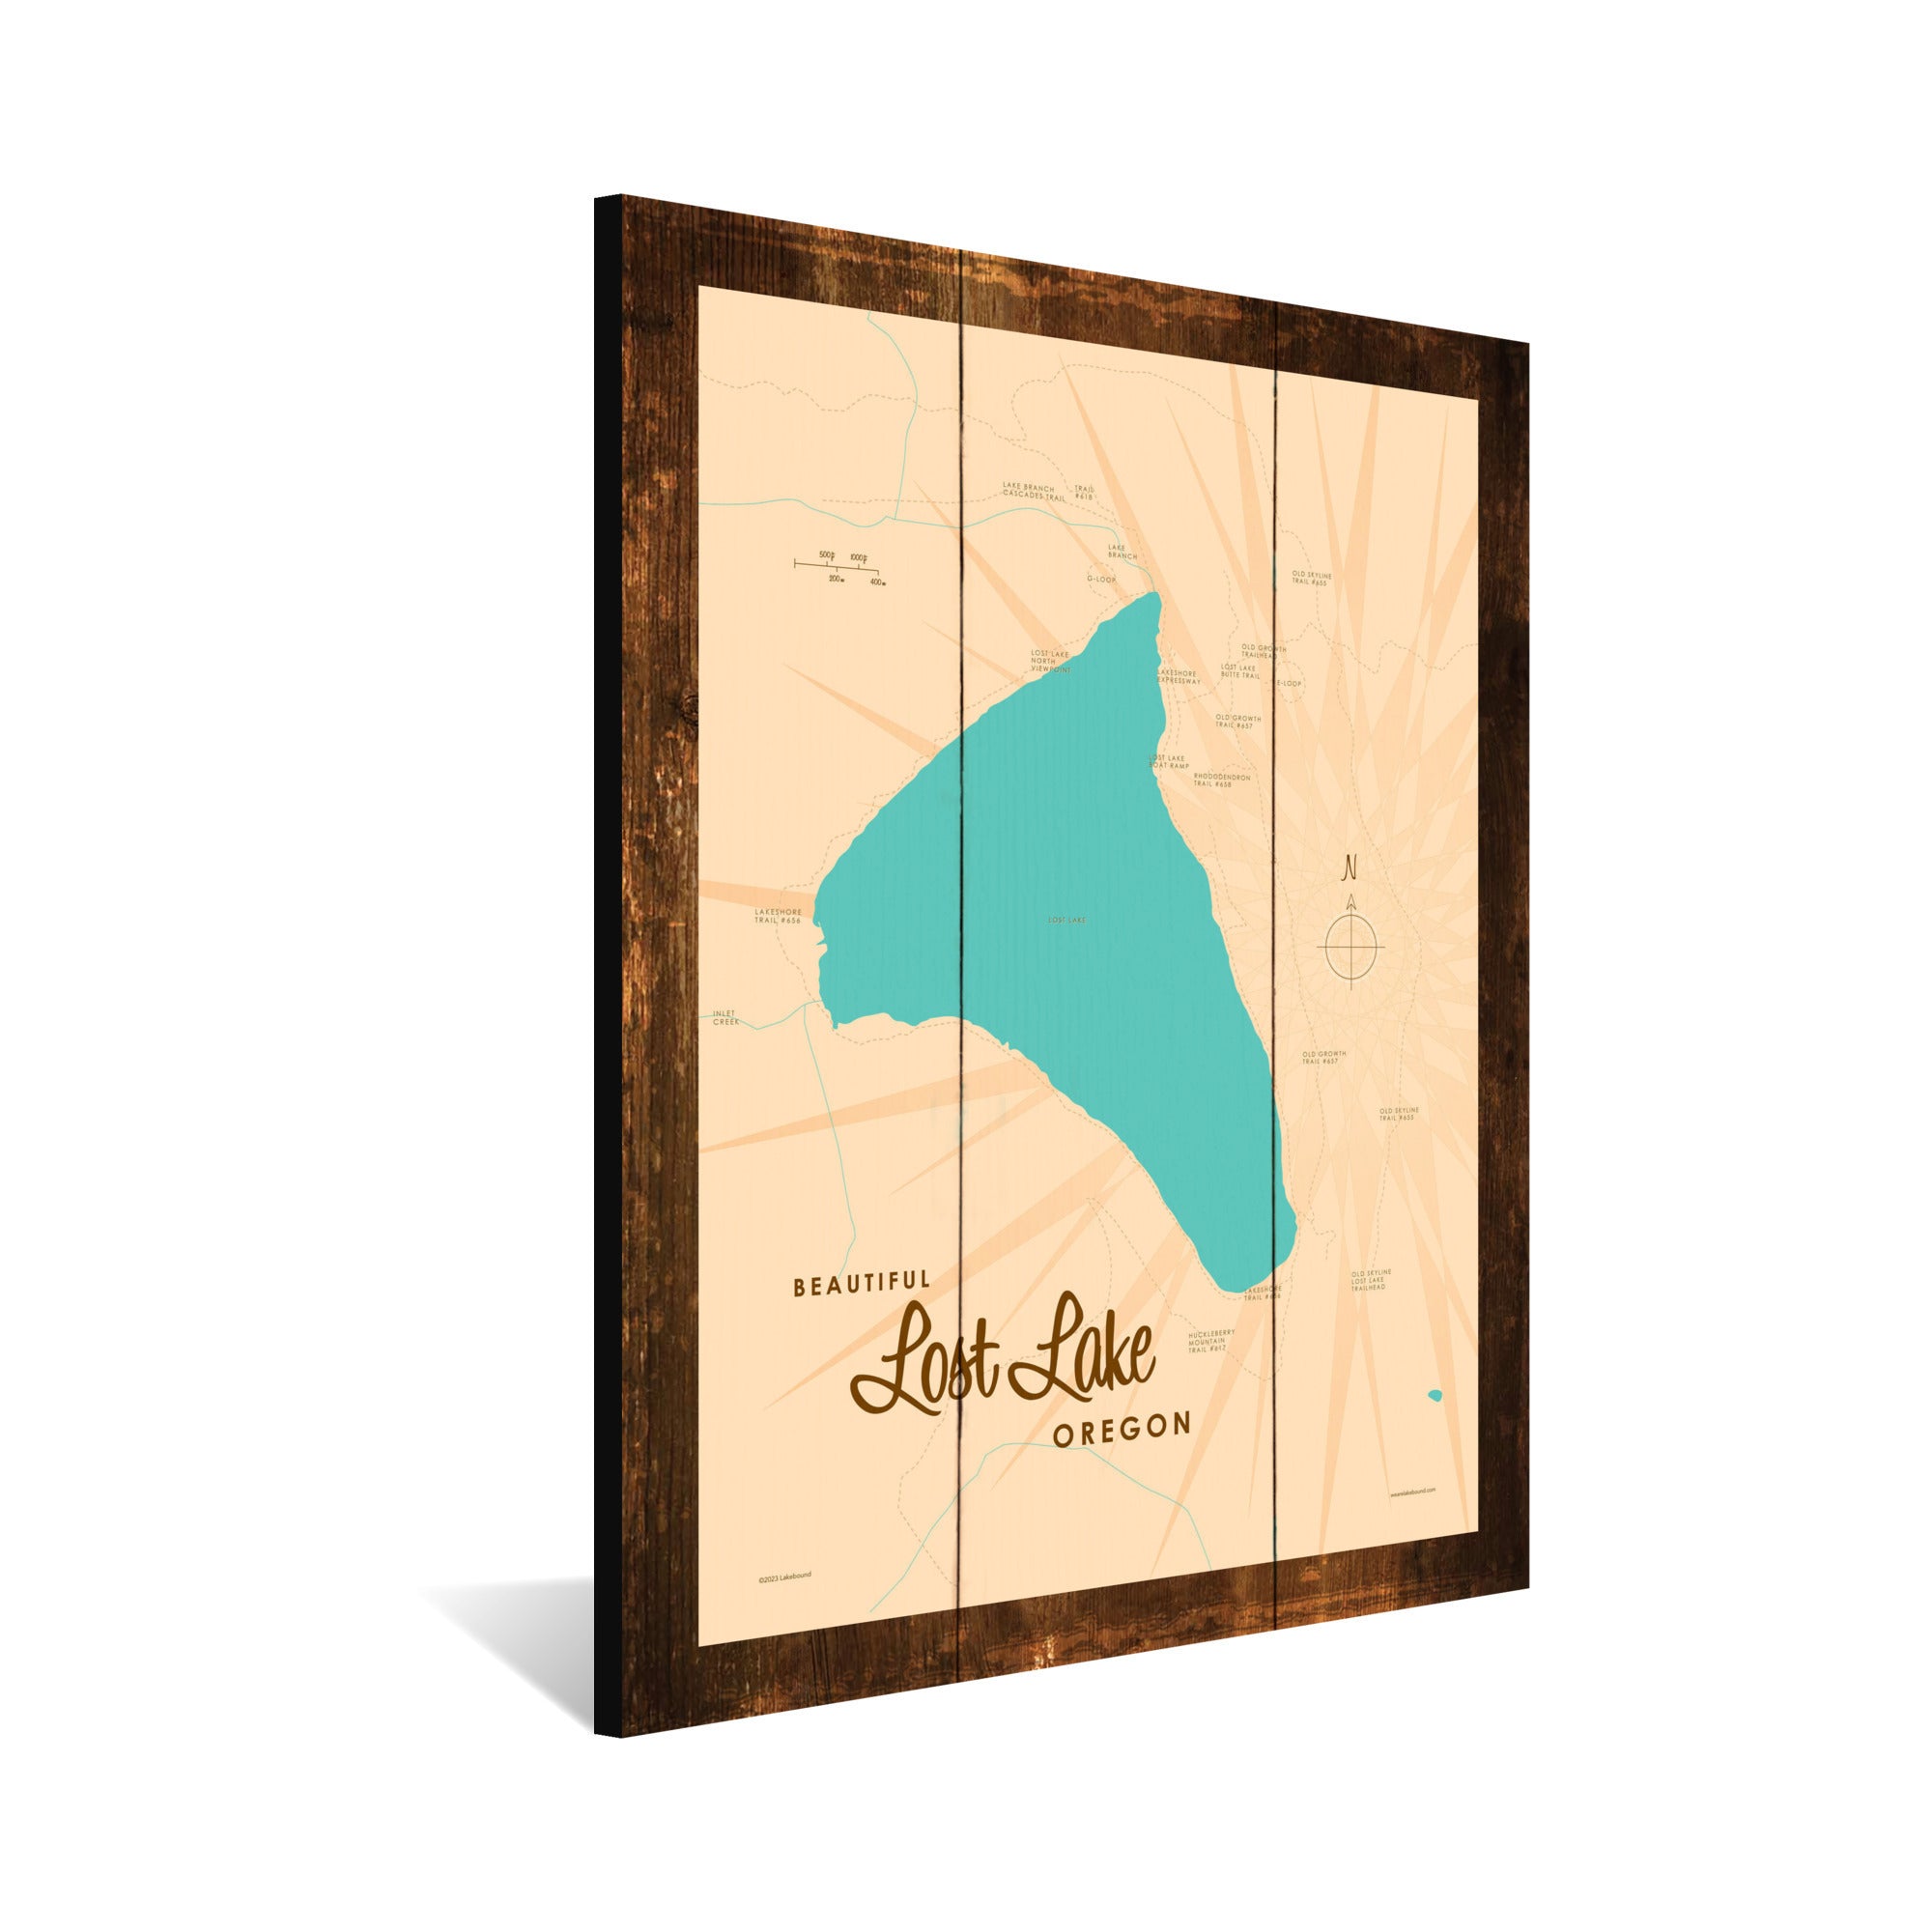 Lost Lake Oregon, Rustic Wood Sign Map Art